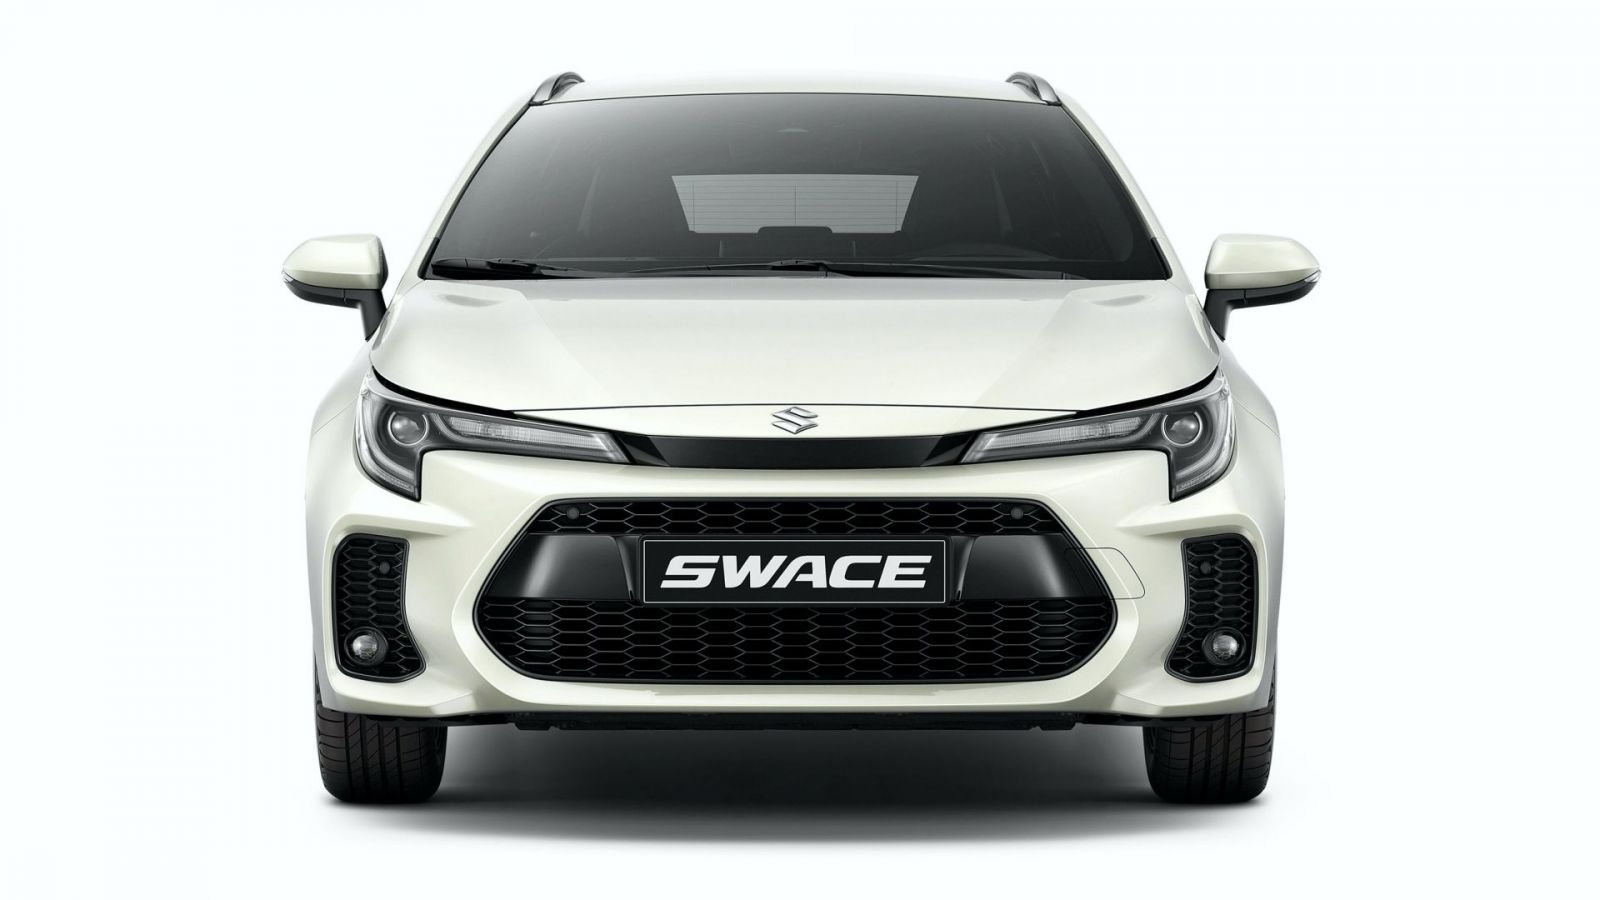 Suzuki Swace based on Toyota Corolla Touring Sports